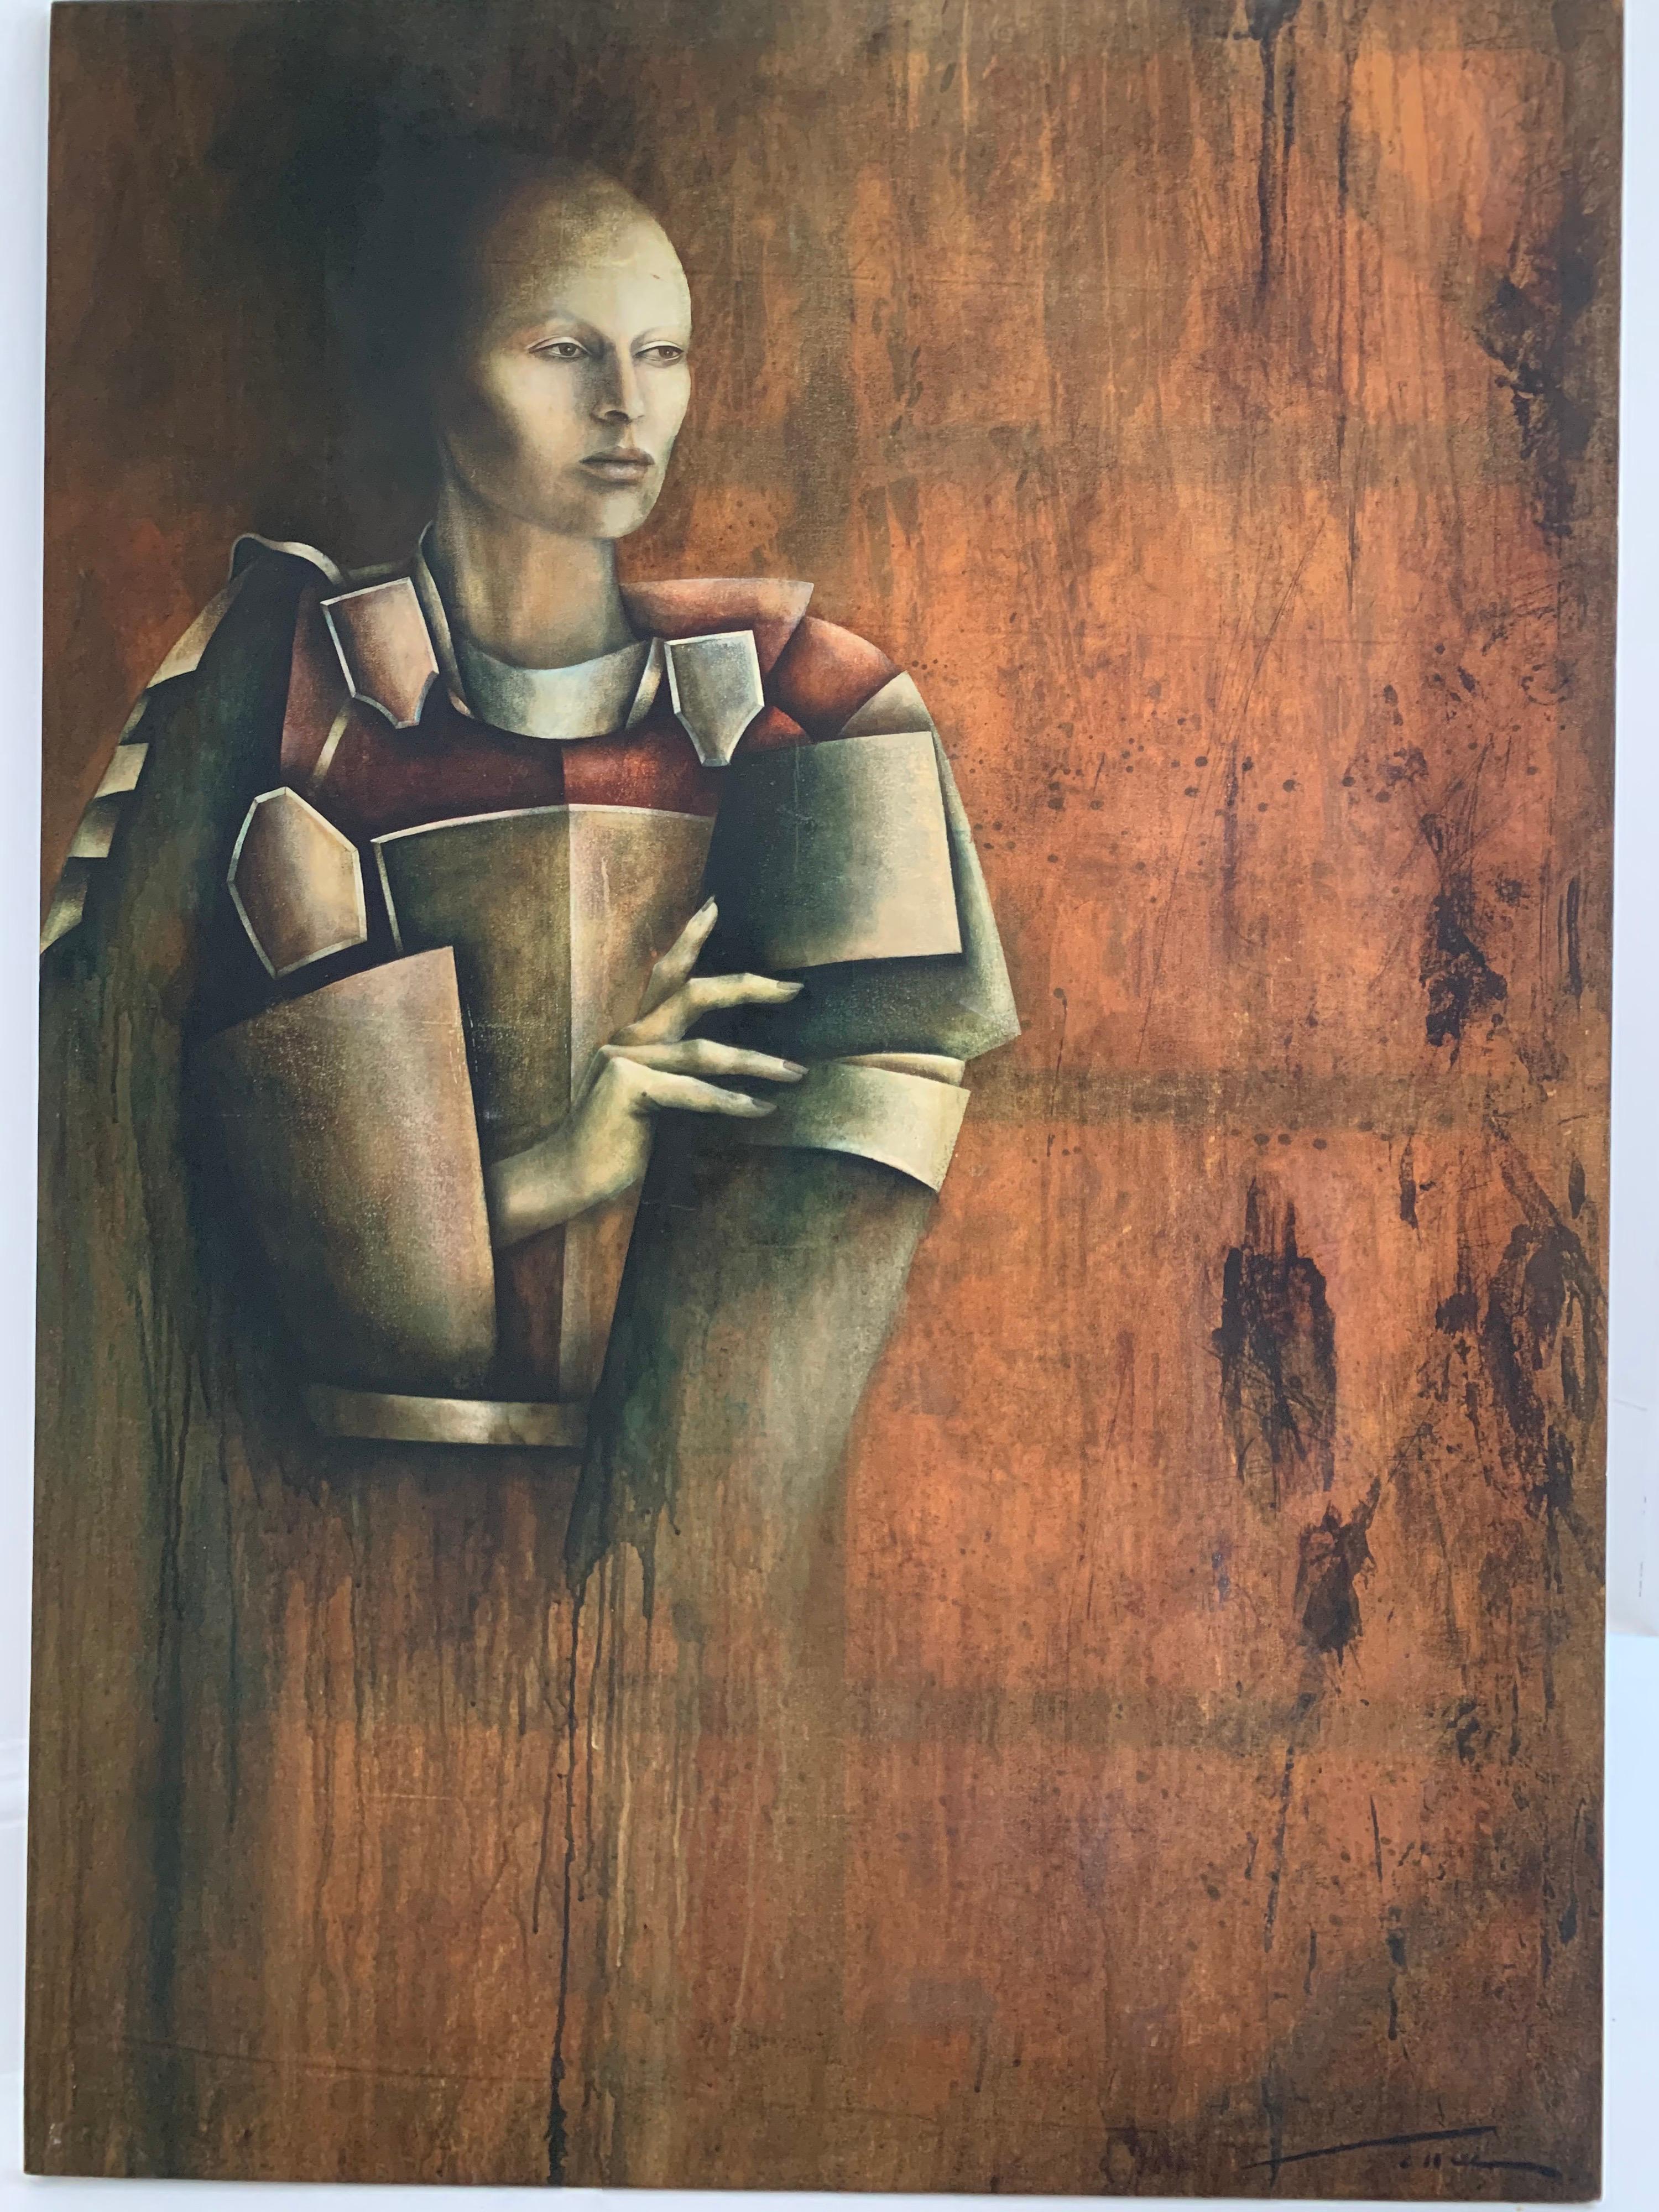 Huge French Modernist Portrait of Cubist Figure Oil Painting on Canvas  - Brown Portrait Painting by Pottier